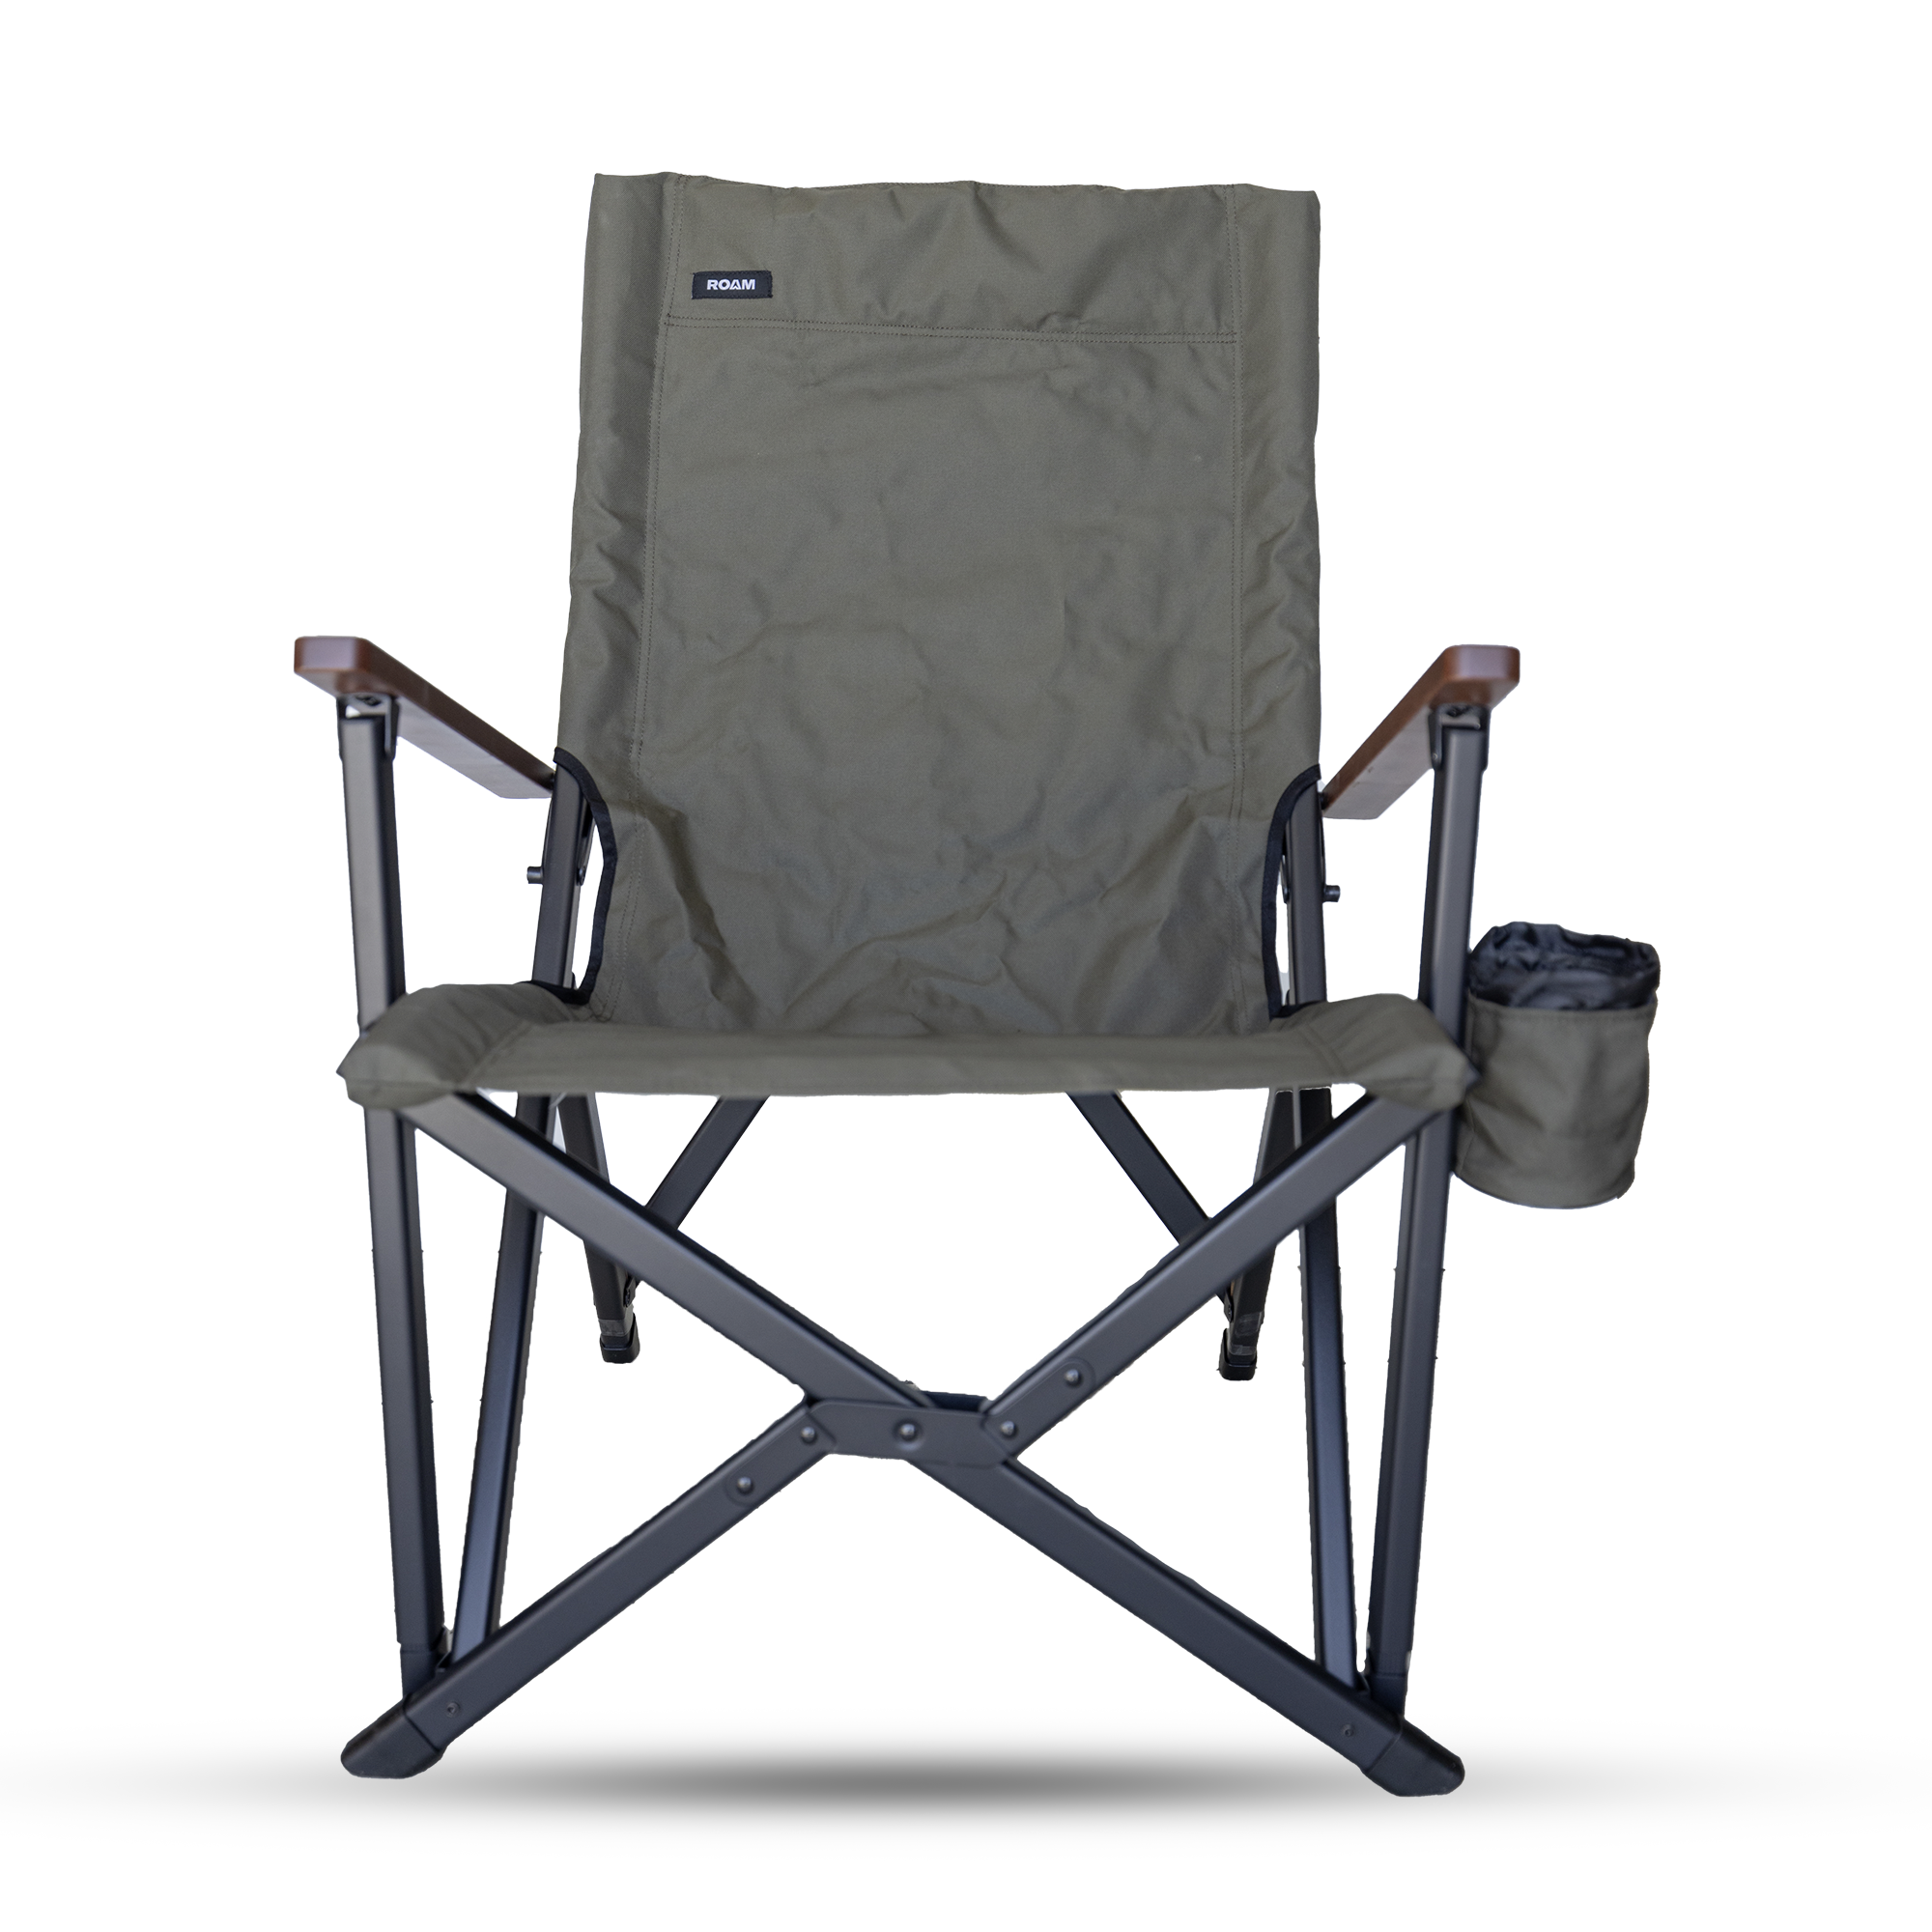 Camp Chair - ROAM Adventure Co.